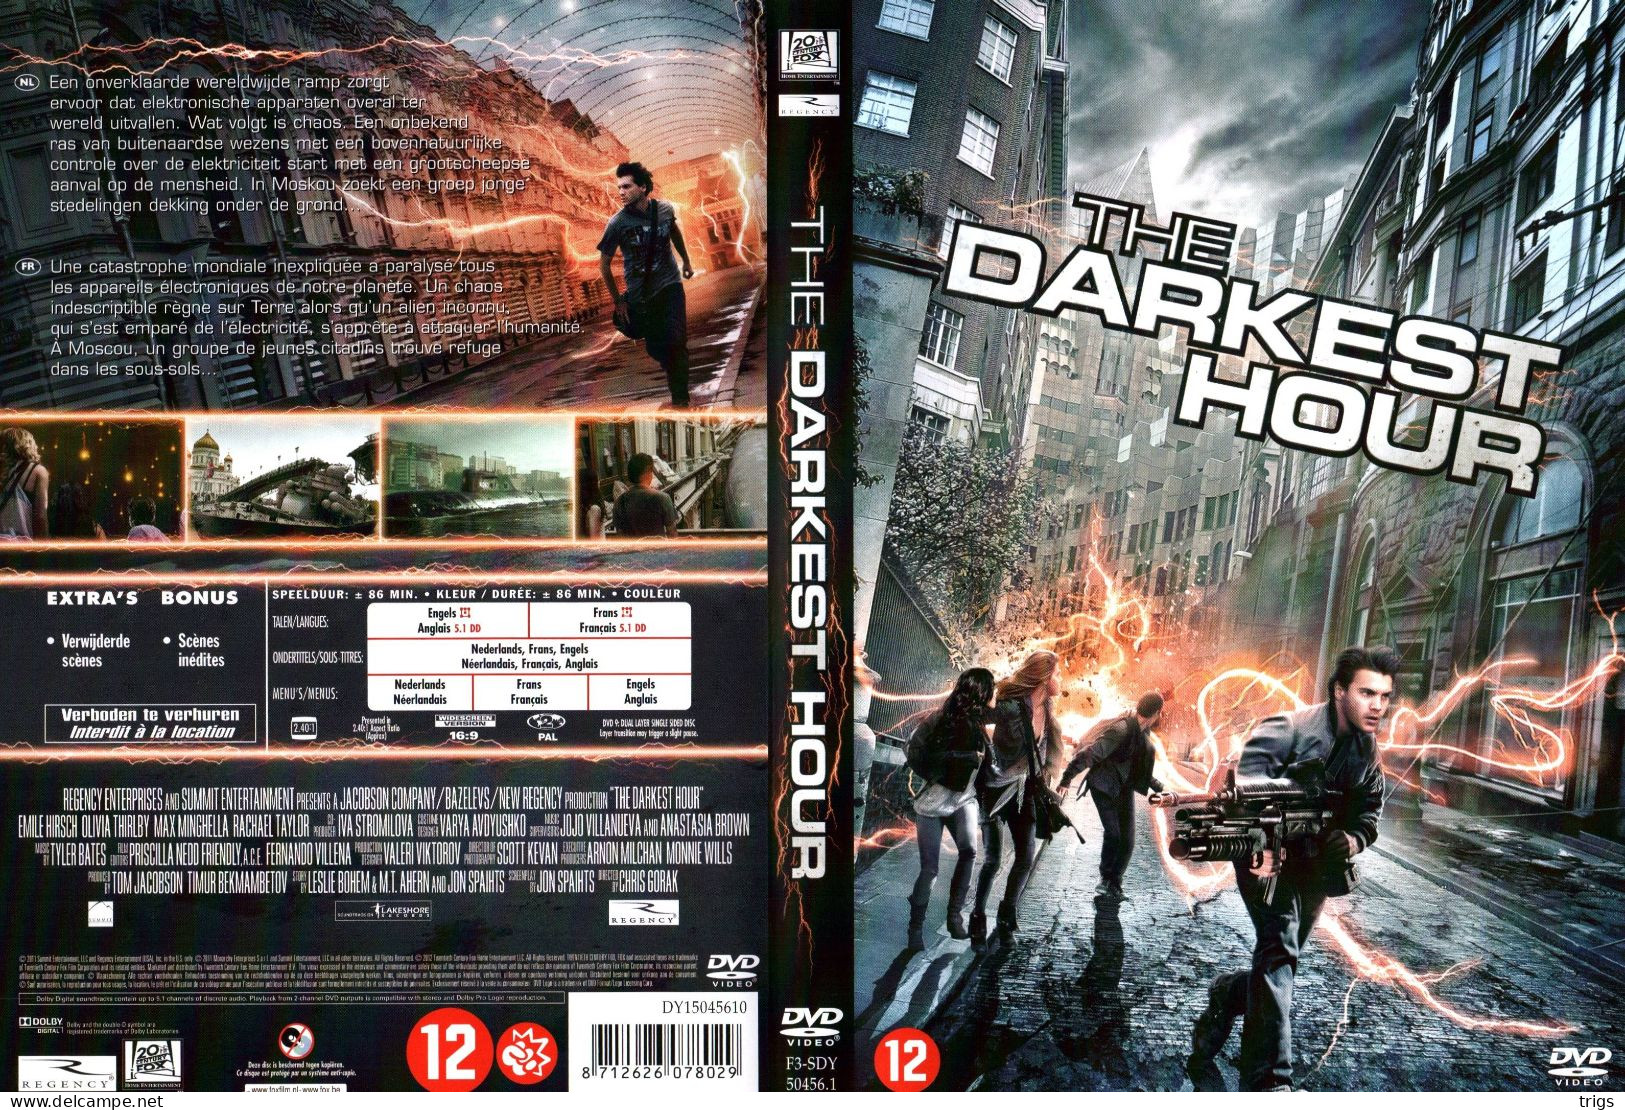 DVD - The Darkest Hour - Sciencefiction En Fantasy